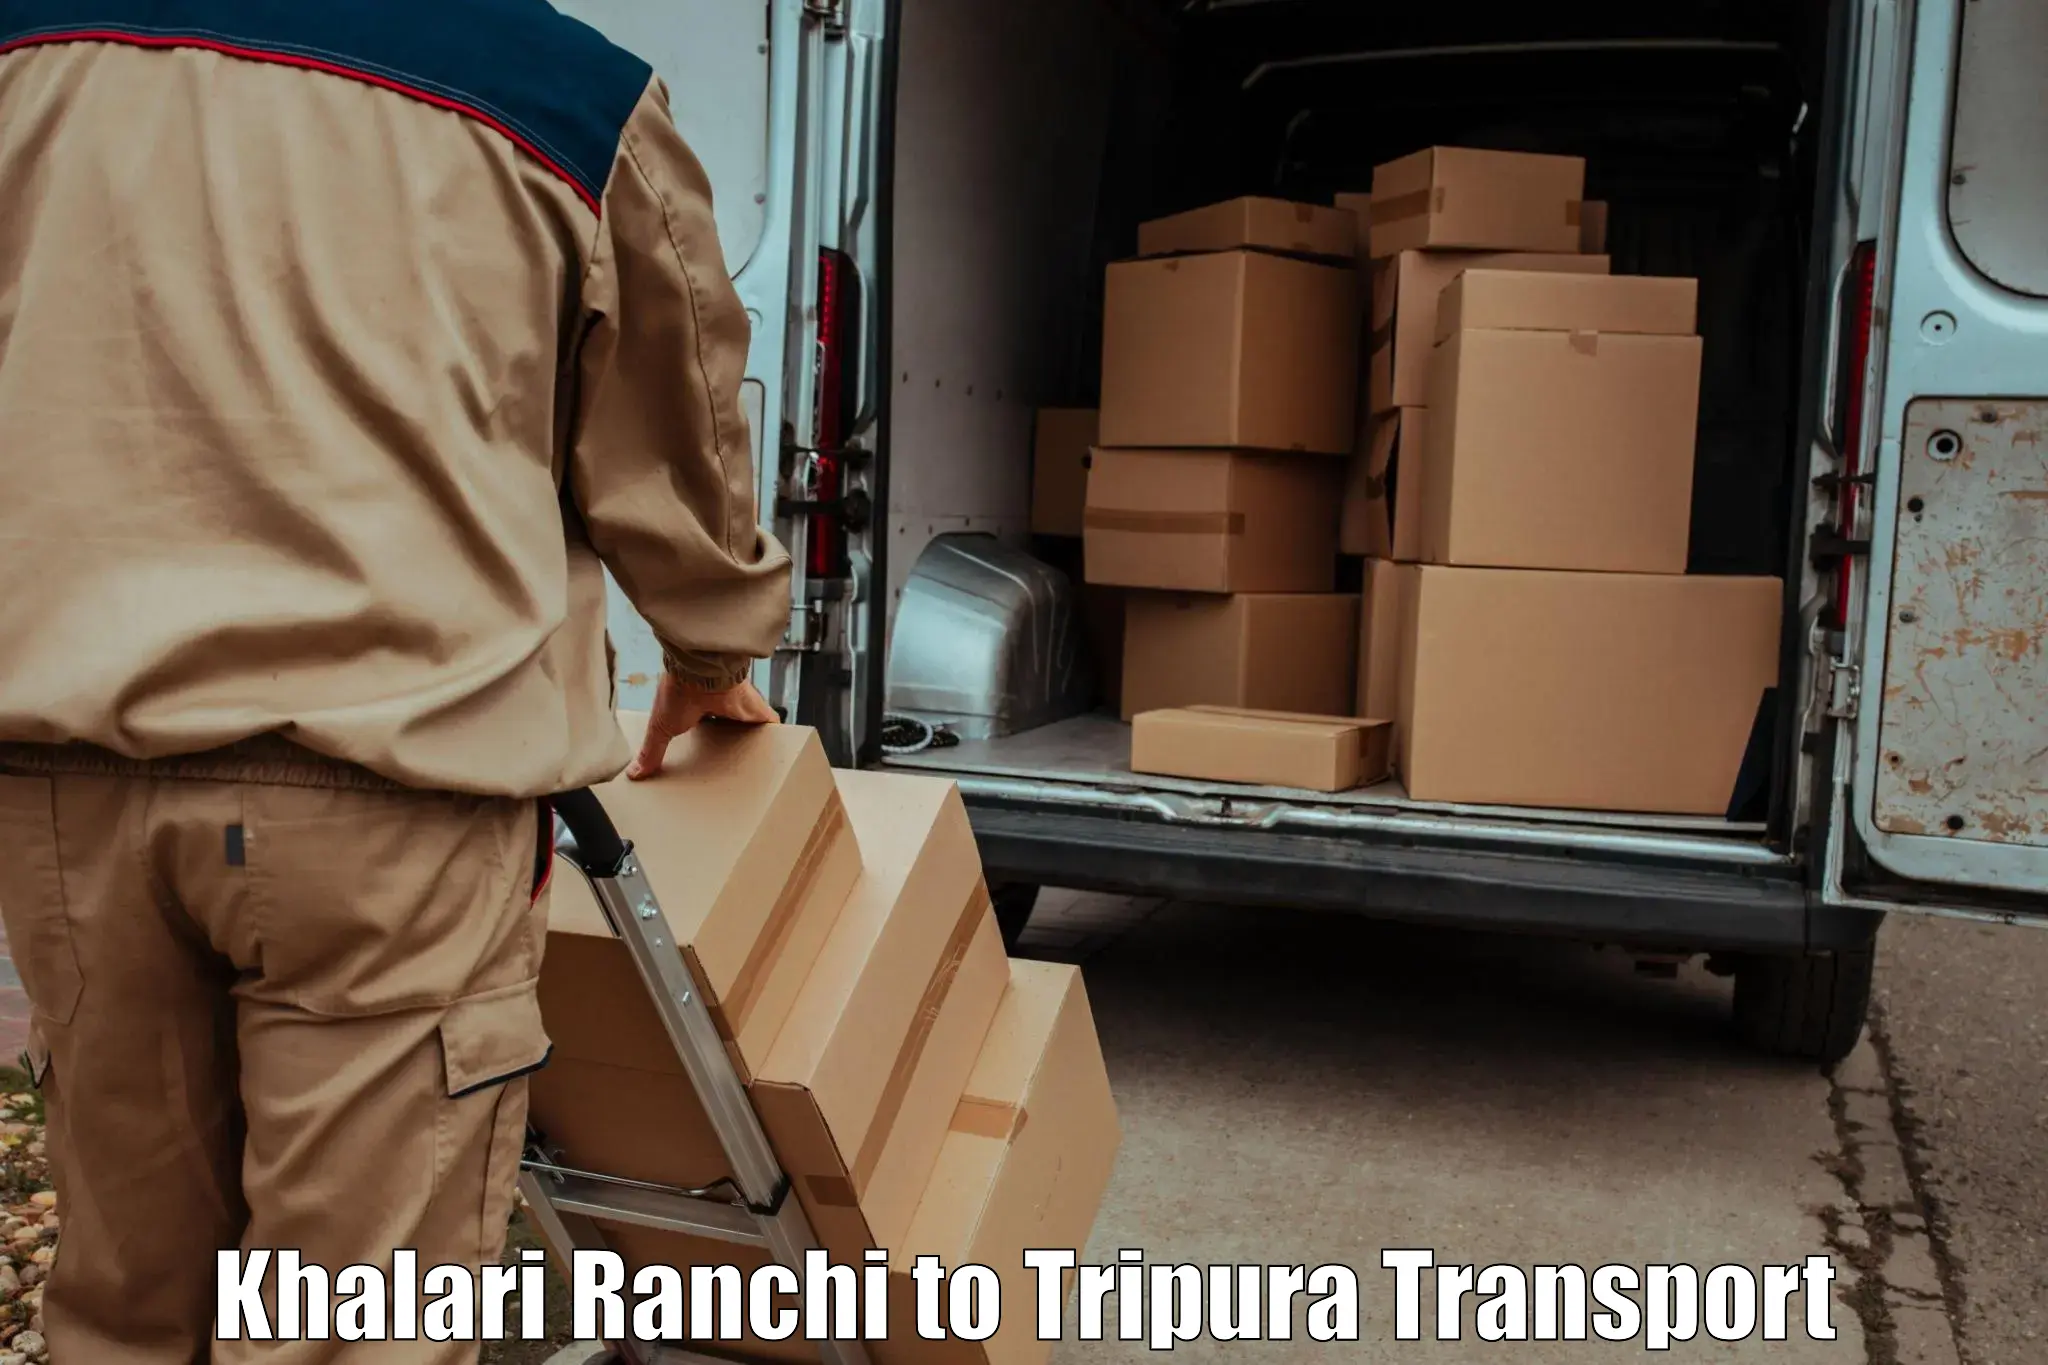 Cargo train transport services Khalari Ranchi to Amarpur